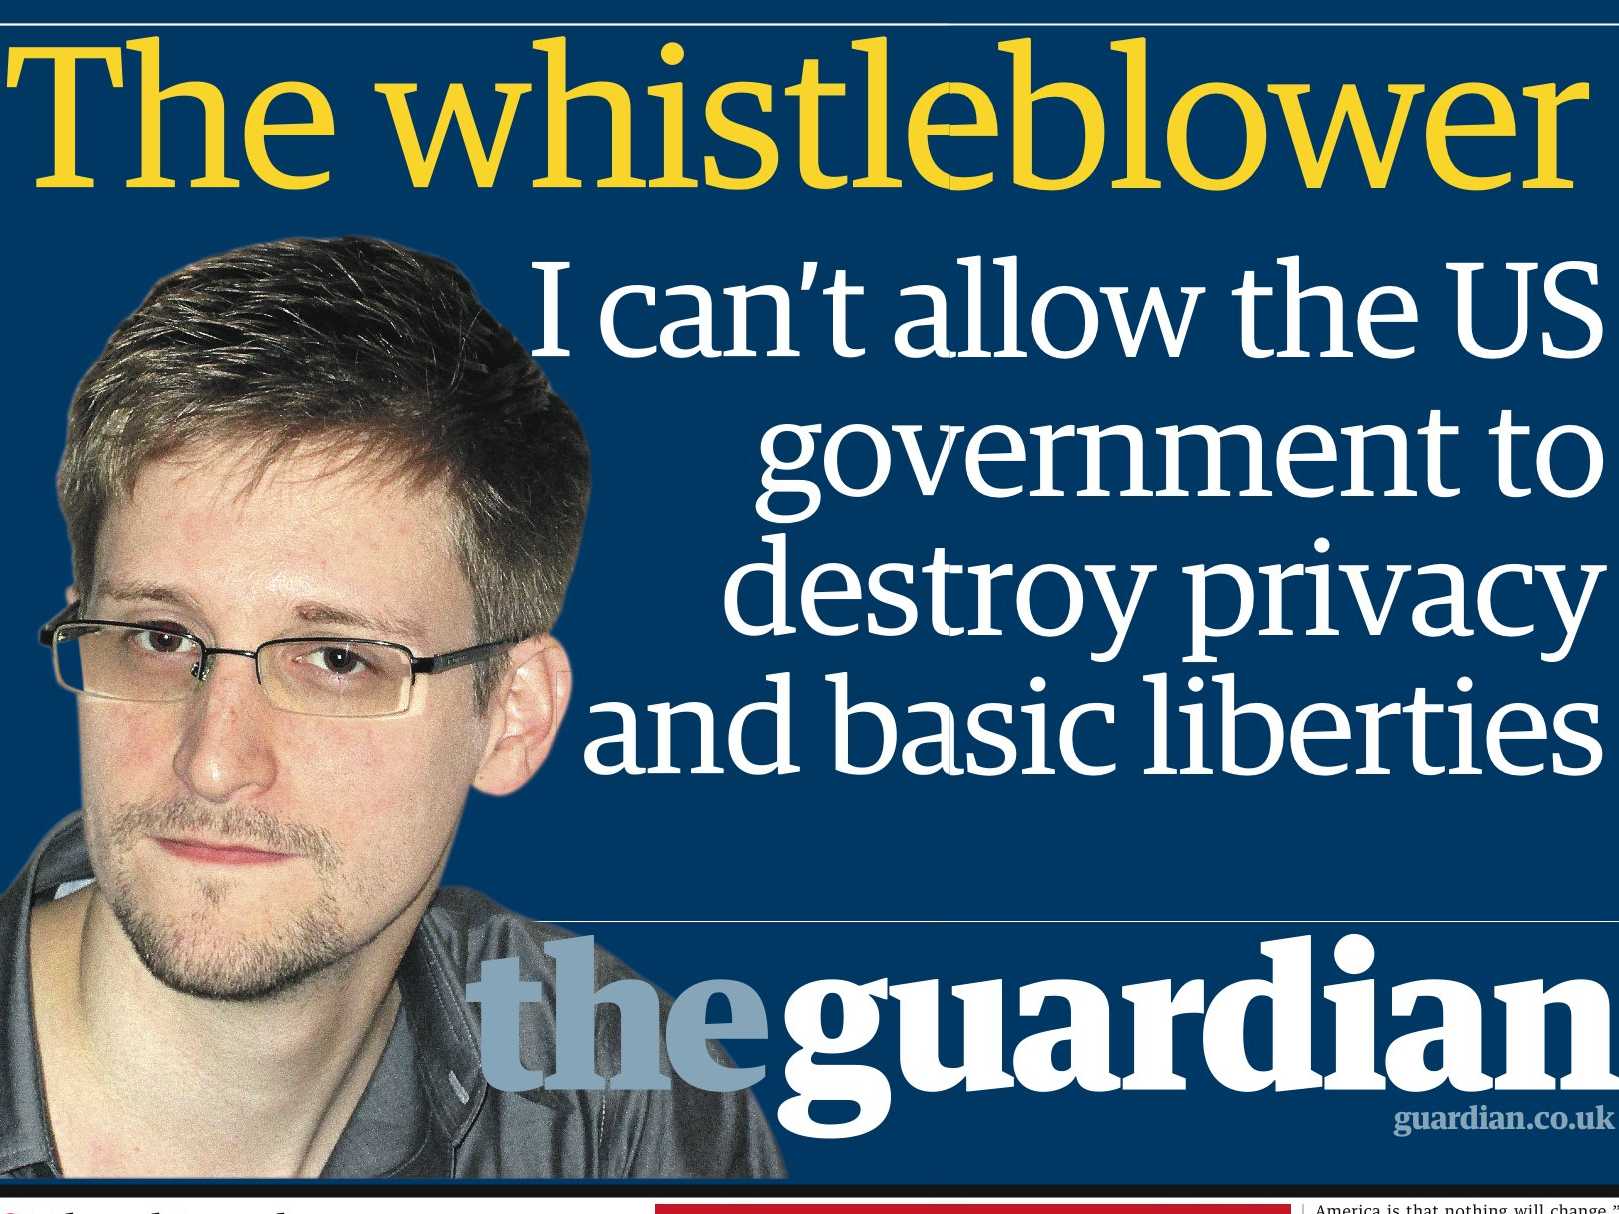 Edward Snowden's quote #1